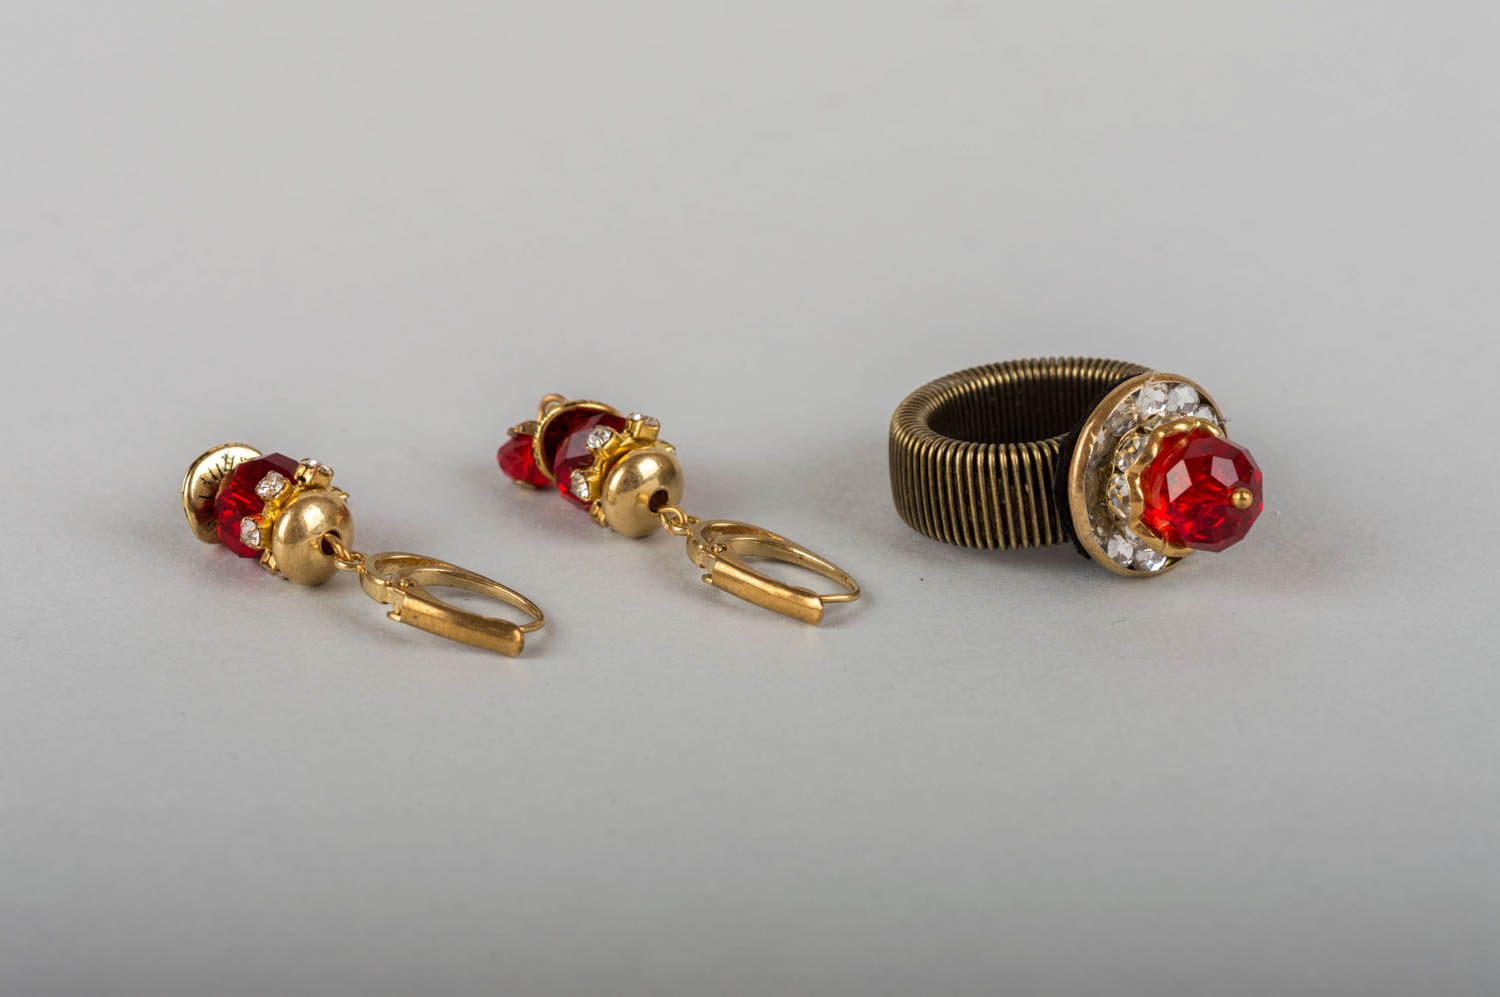 Набор украшений с чешскими кристаллами 2 аксессуара кольцо и серьги хэнд мейд фото 2